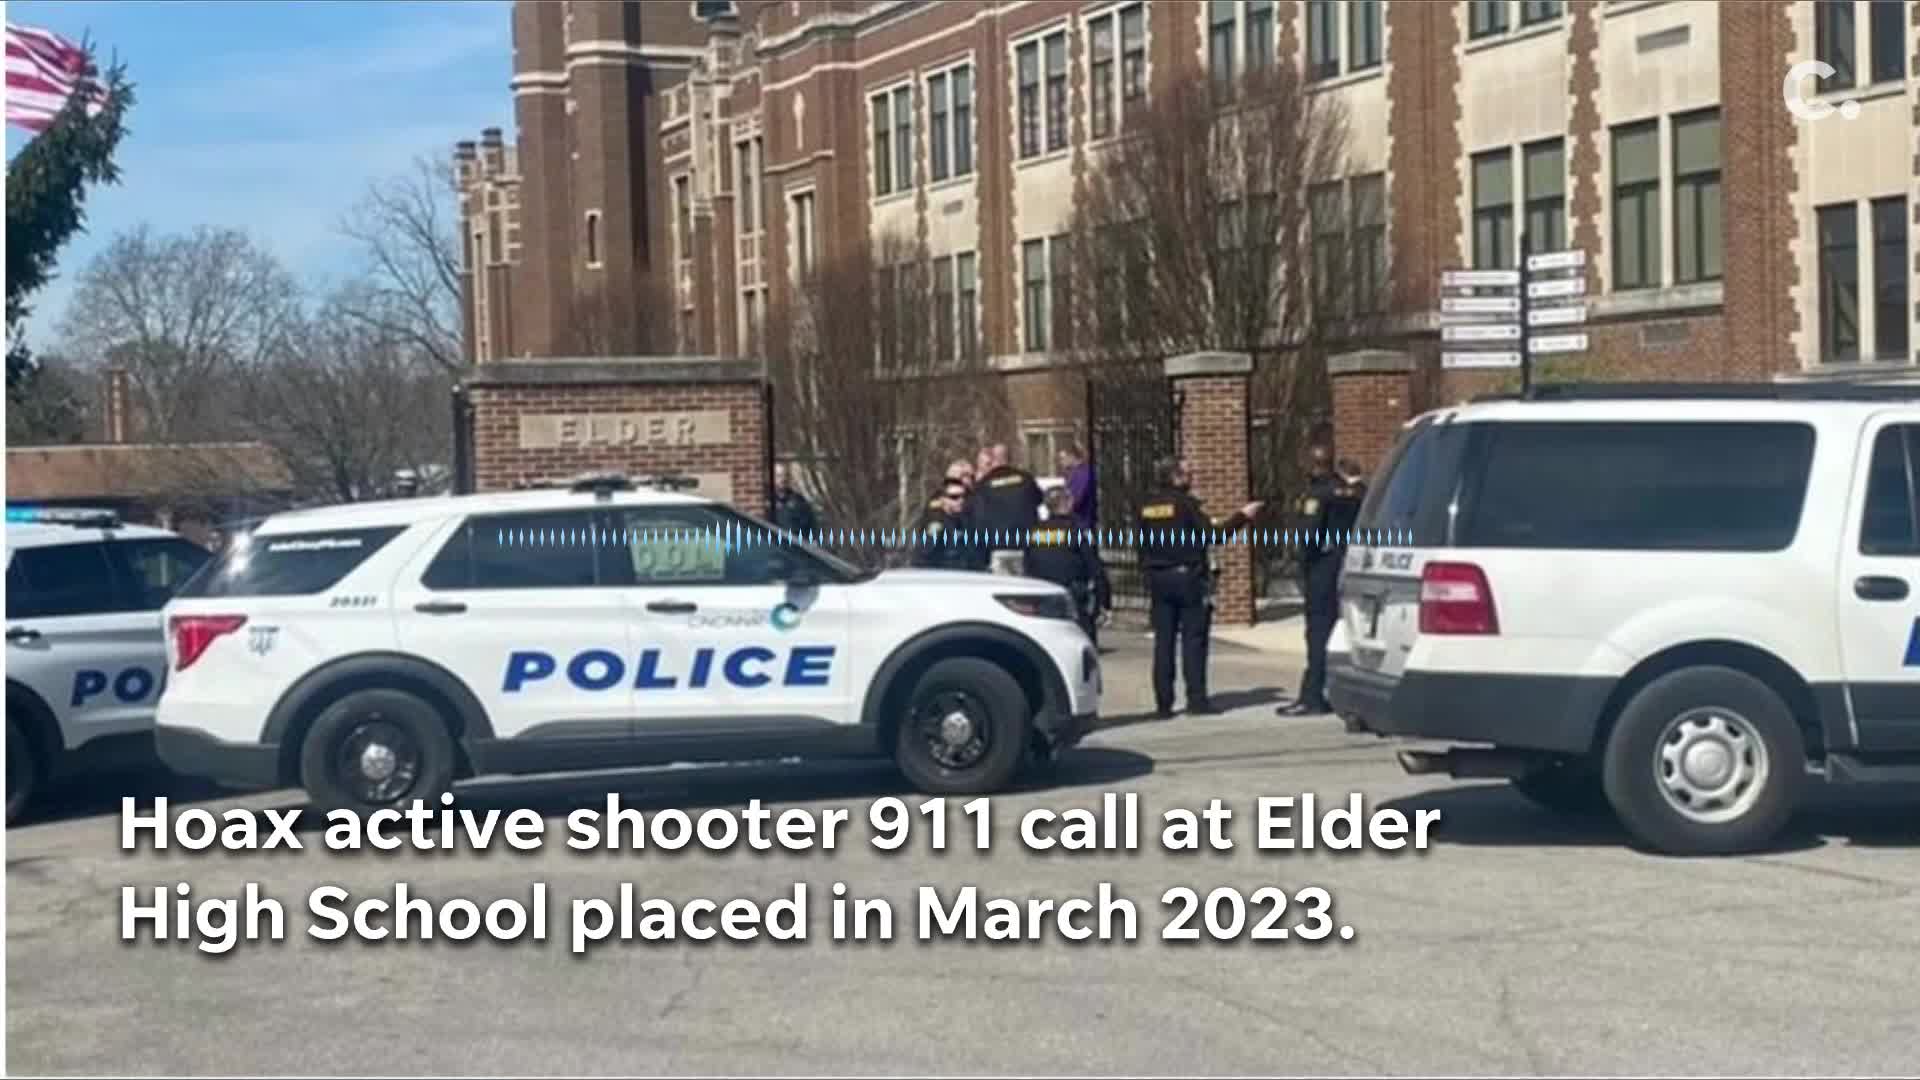 Listen Hoax active shooter 911 calls at Elder, Princeton high schools